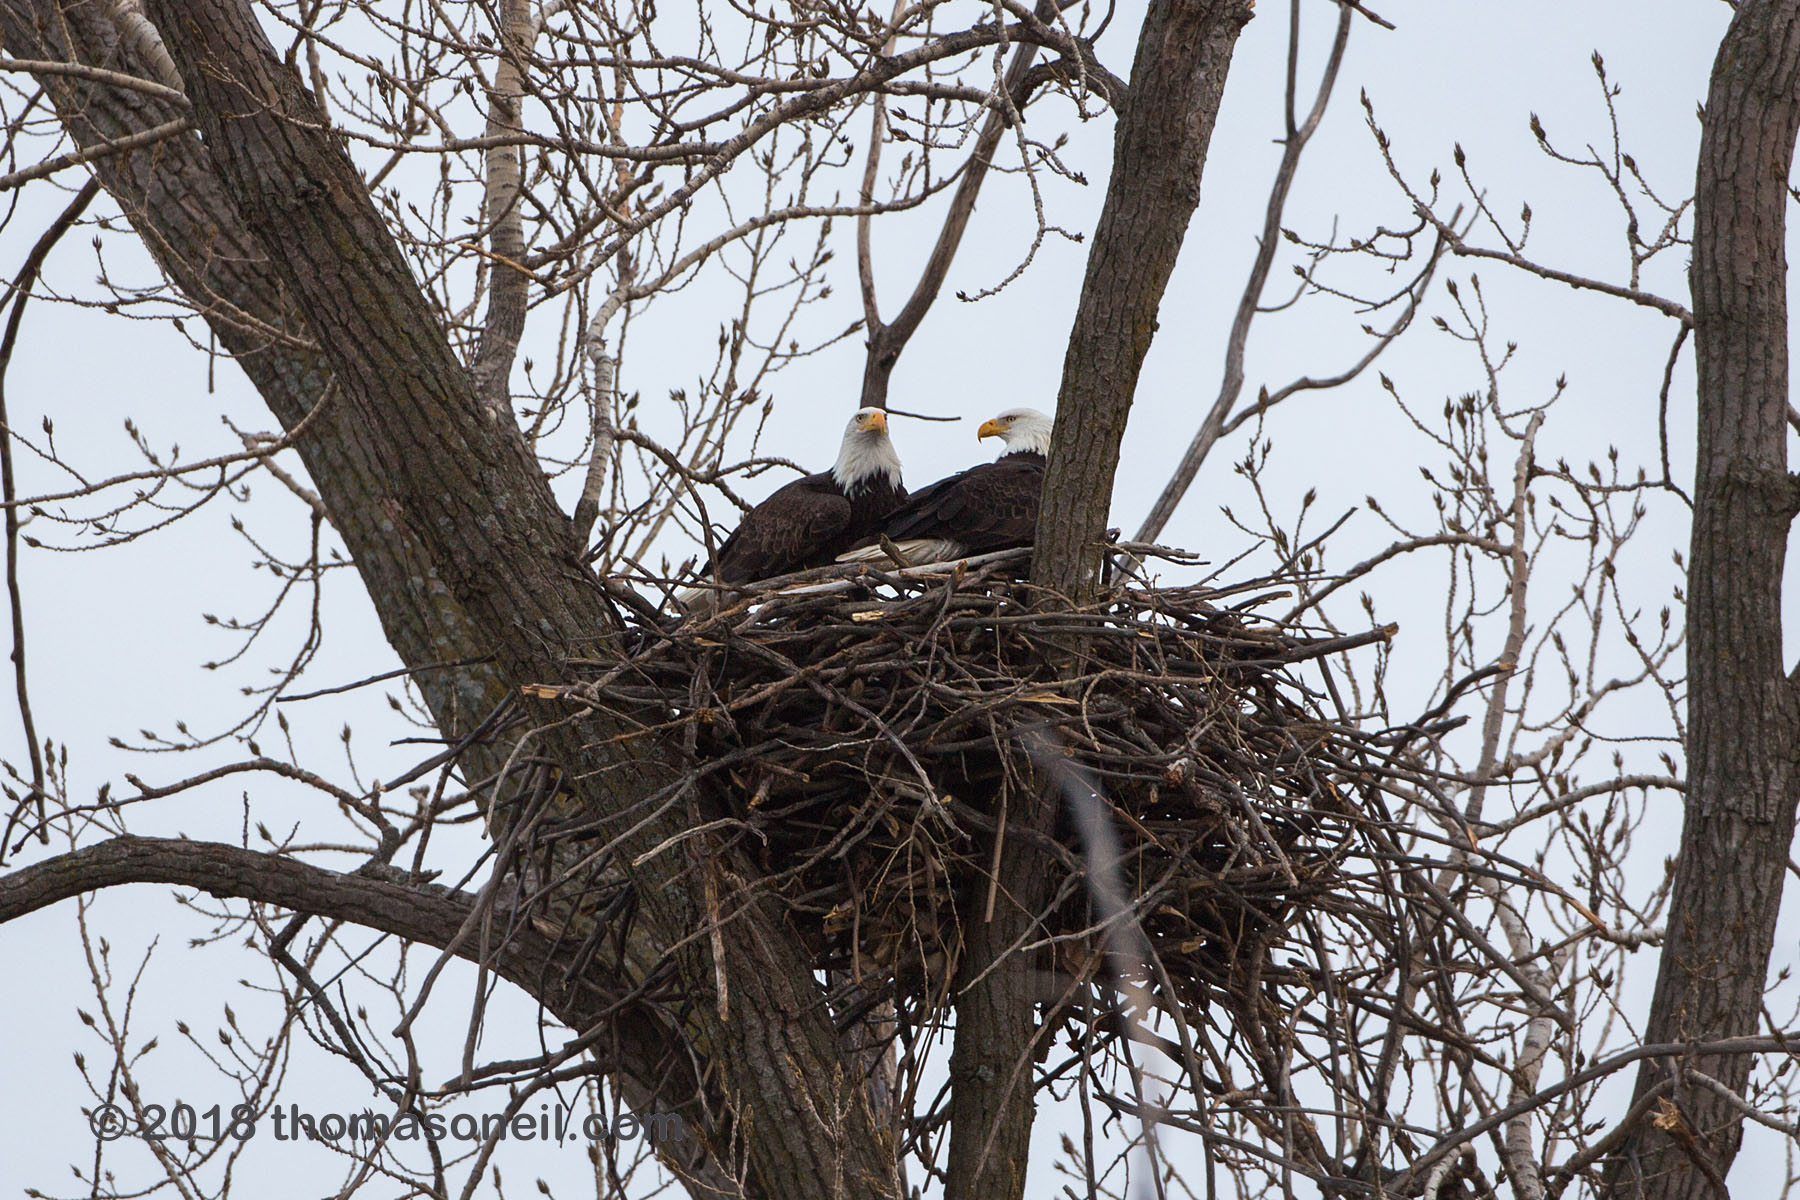 Bald eagles in nest, Loess Bluffs National Wildlife Refuge, Missouri, December 2018.  Click for next photo.